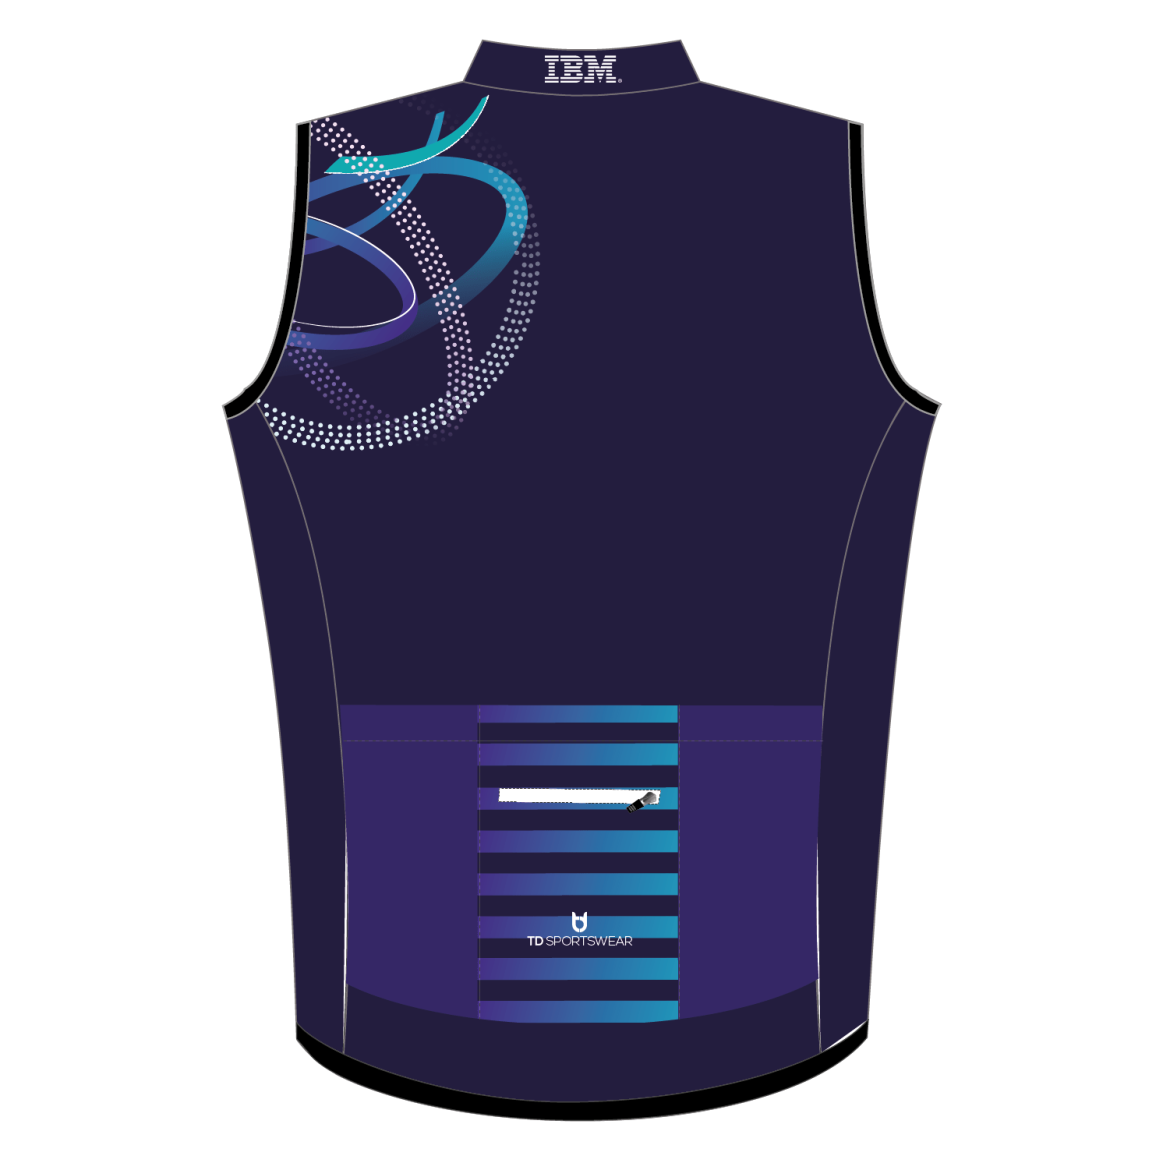 IBM cycling vest TD sportswear back